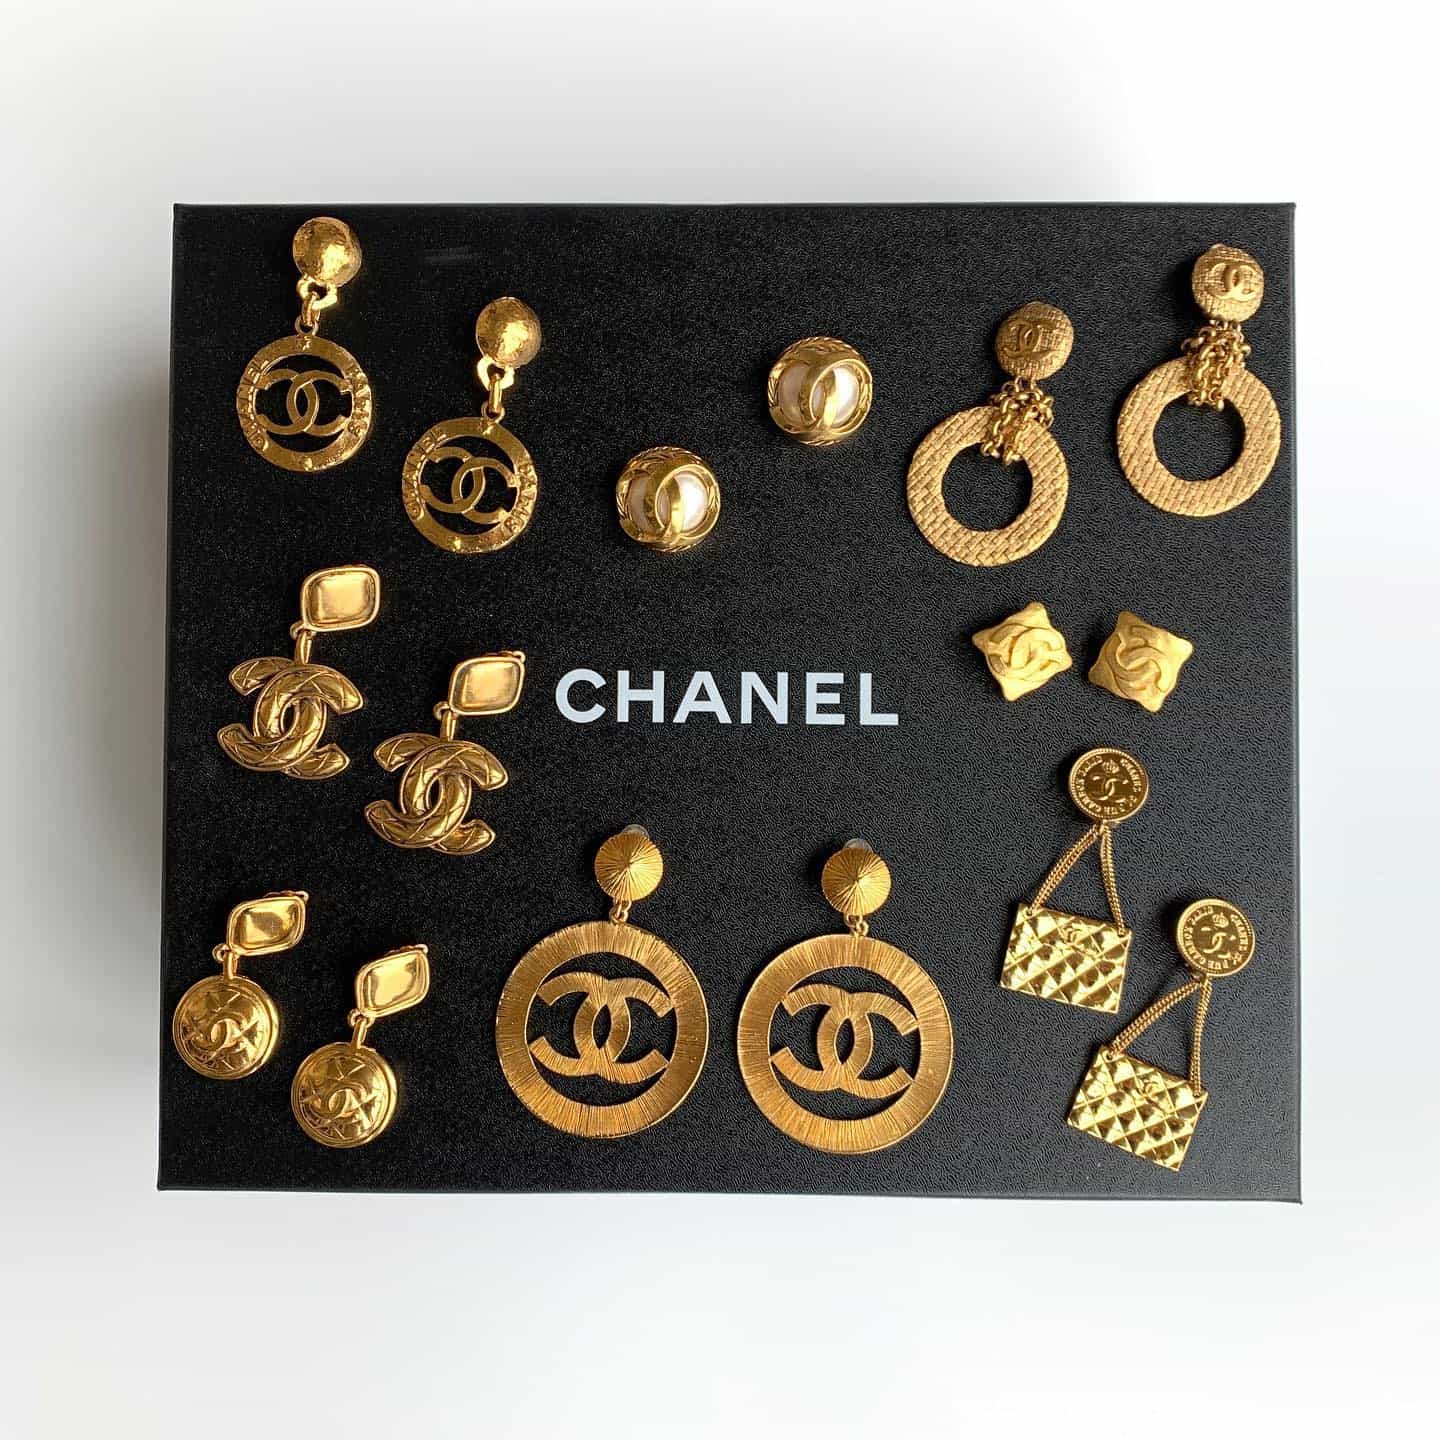 Vintage Chanel earrings